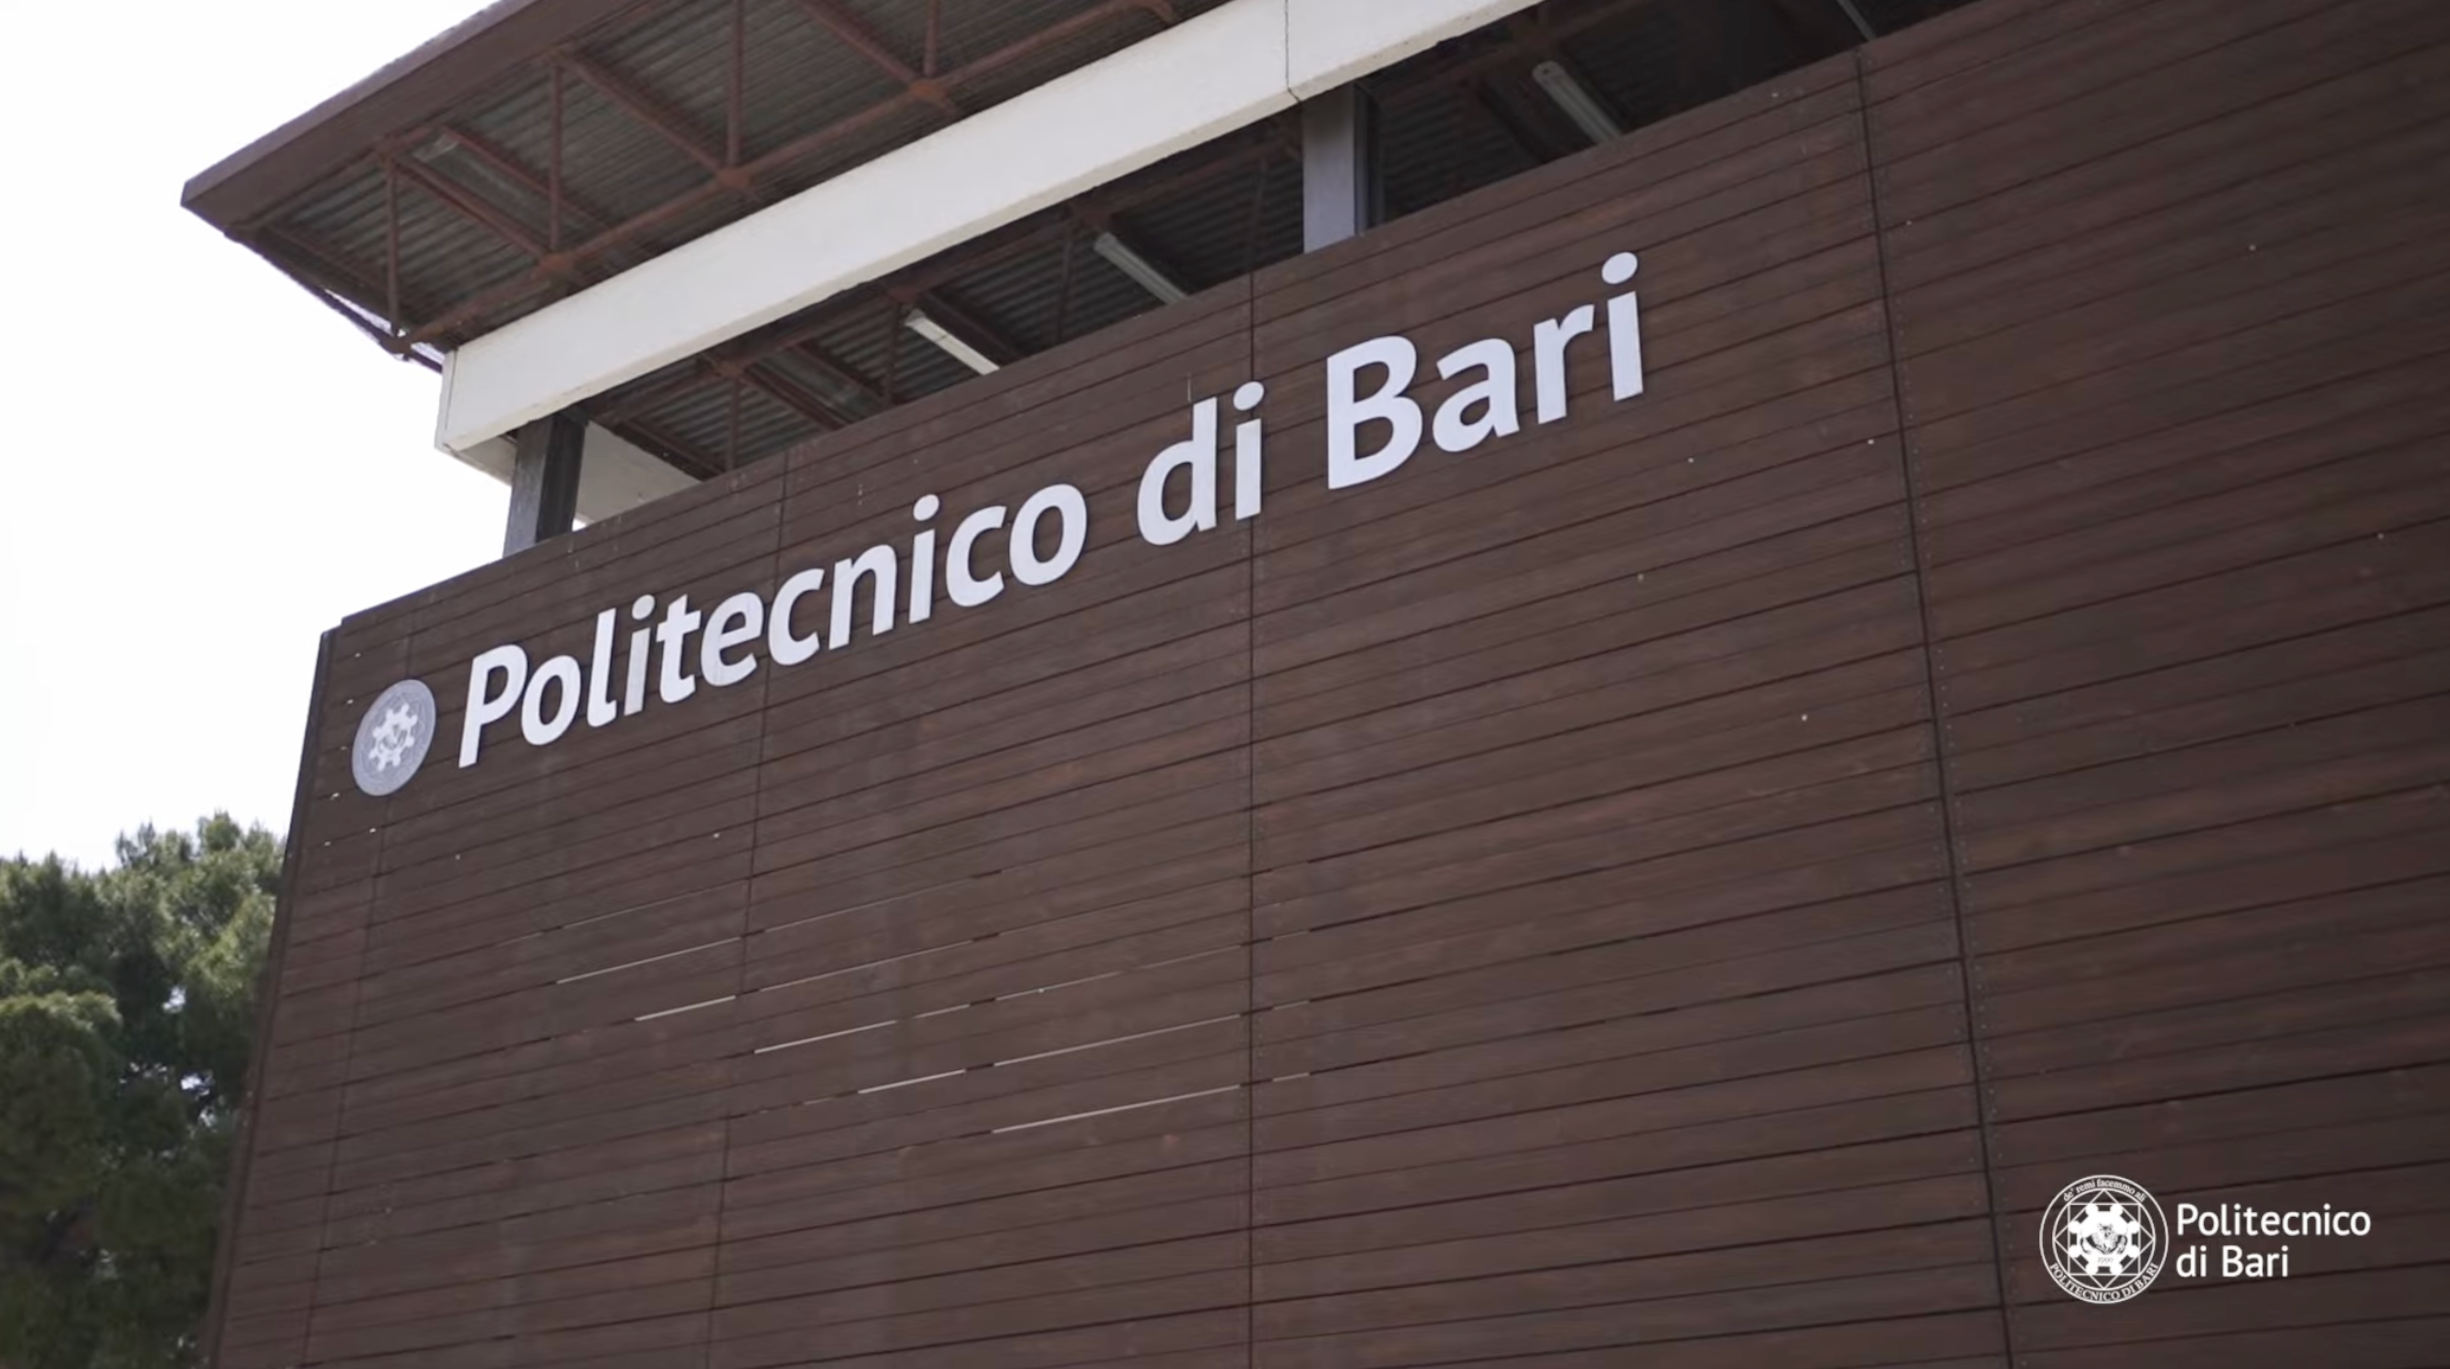 Introducing Politecnico di Bari